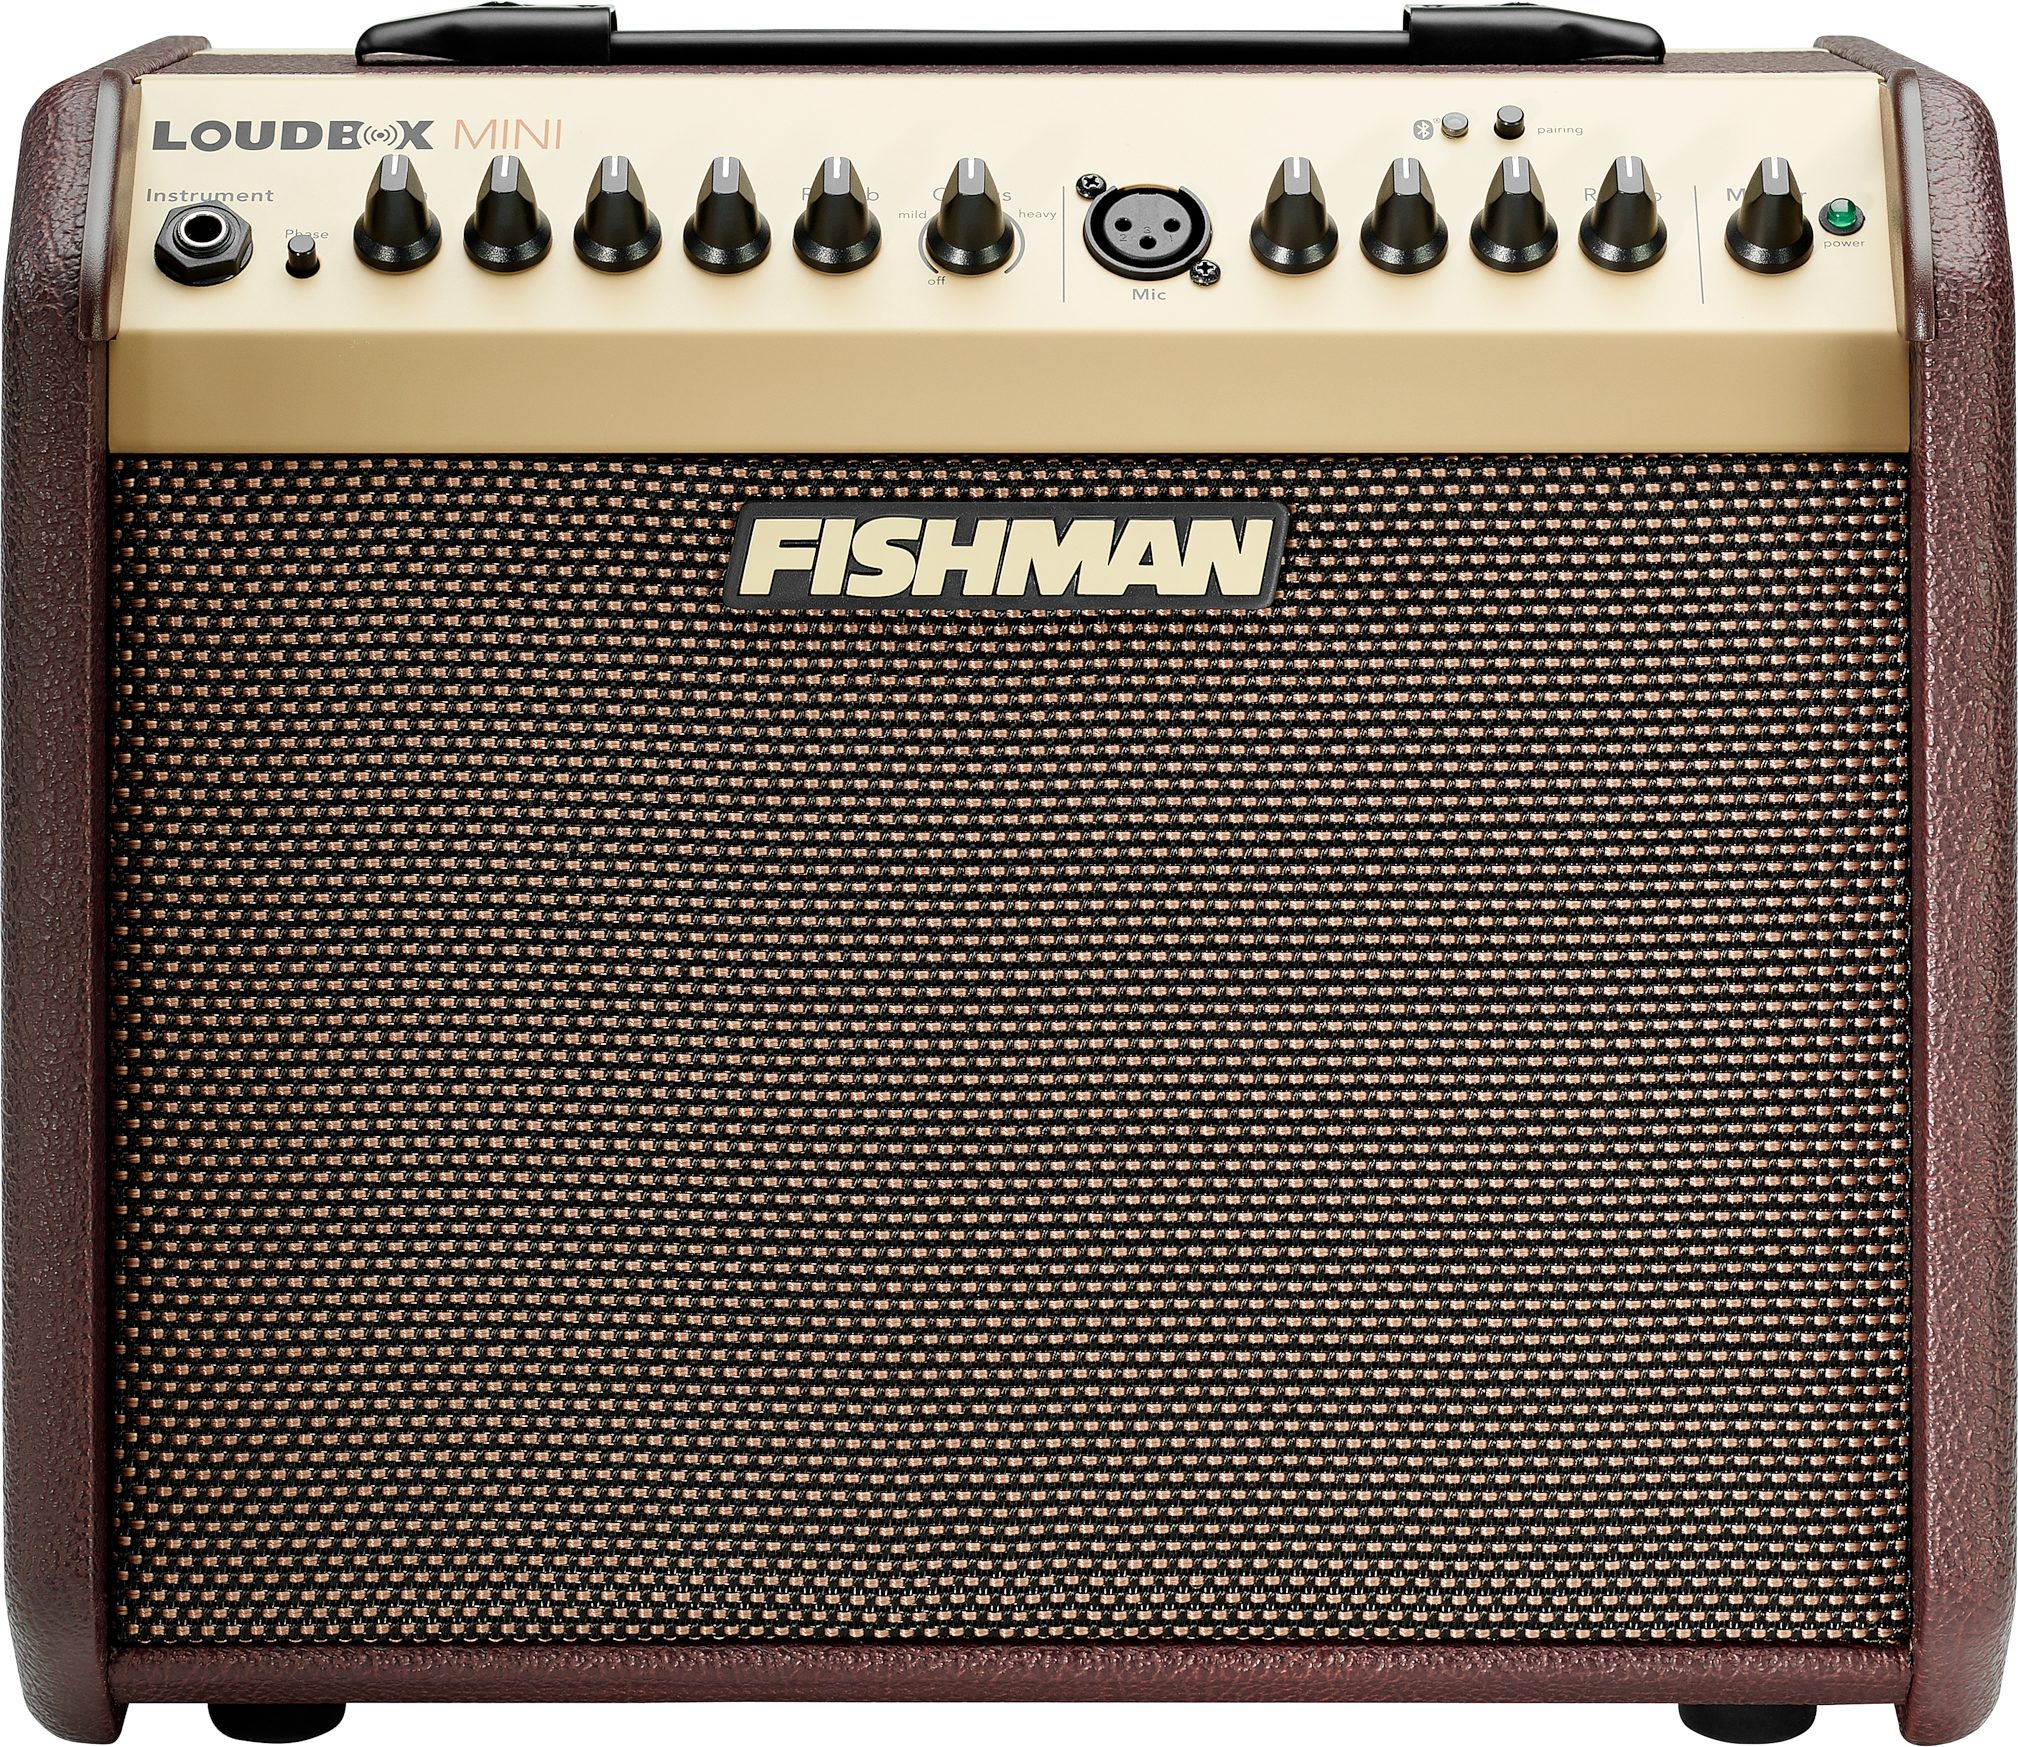 Fishman Loudbox Mini Combo Amplifier with Bluetooth (60 Watts)